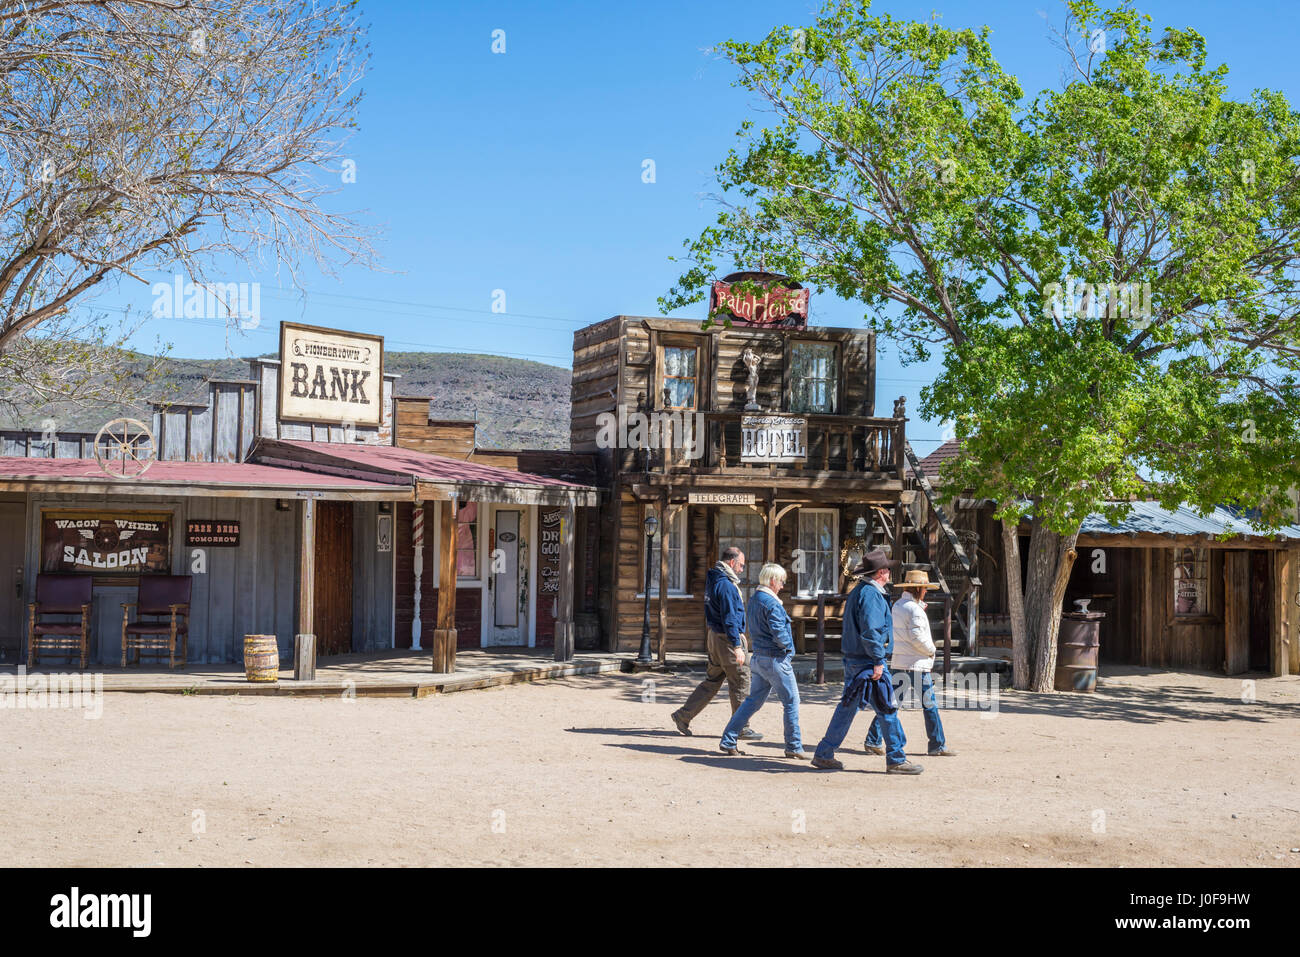 Pioneer Stadt in Yucca Valley, Kalifornien, USA. Stockfoto